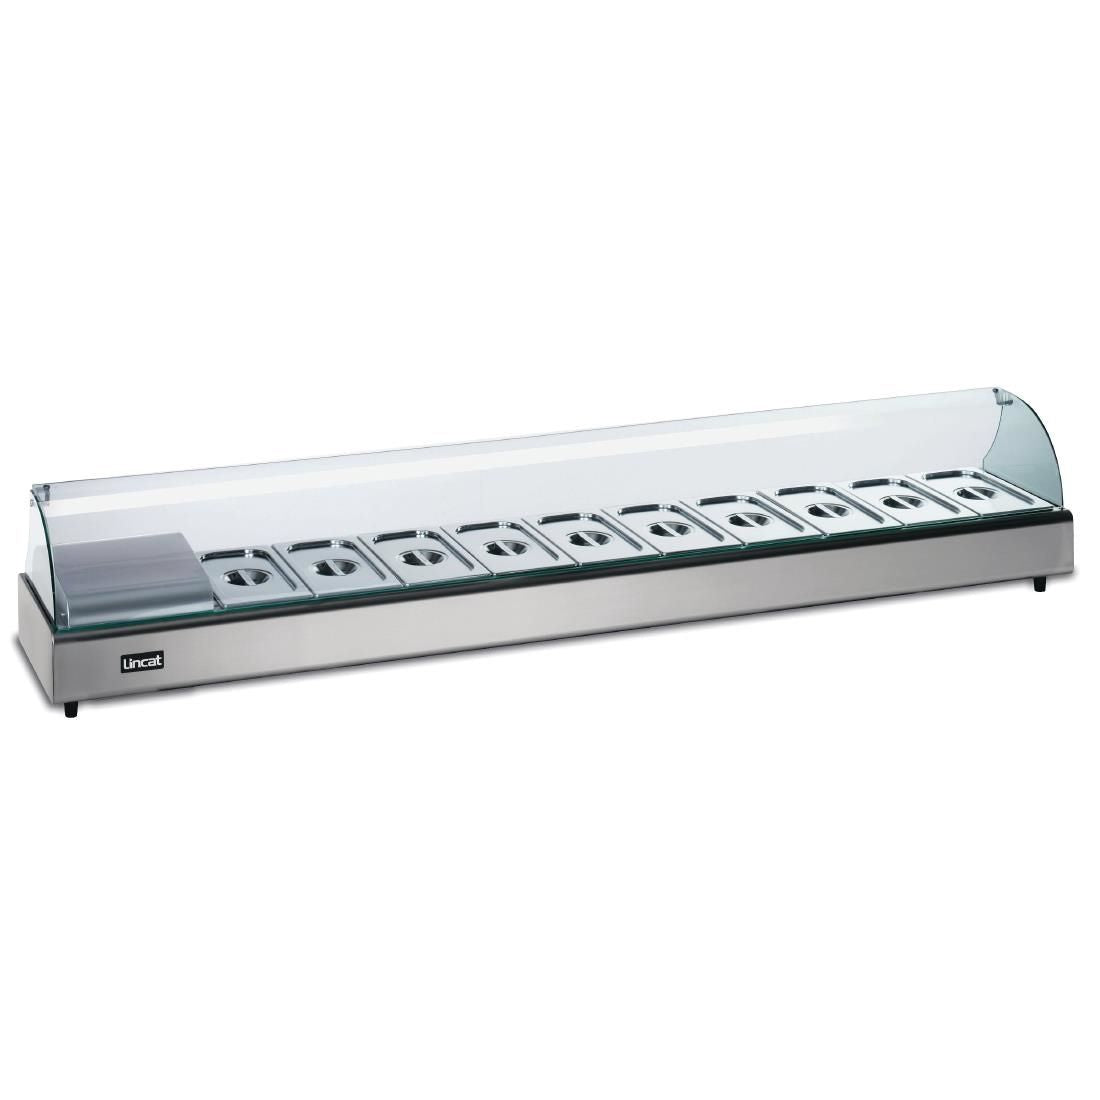 FDB10 - Lincat Seal Counter-top Food Display Bar - Refrigerated - W 2107 mm - 0.175 kW JD Catering Equipment Solutions Ltd